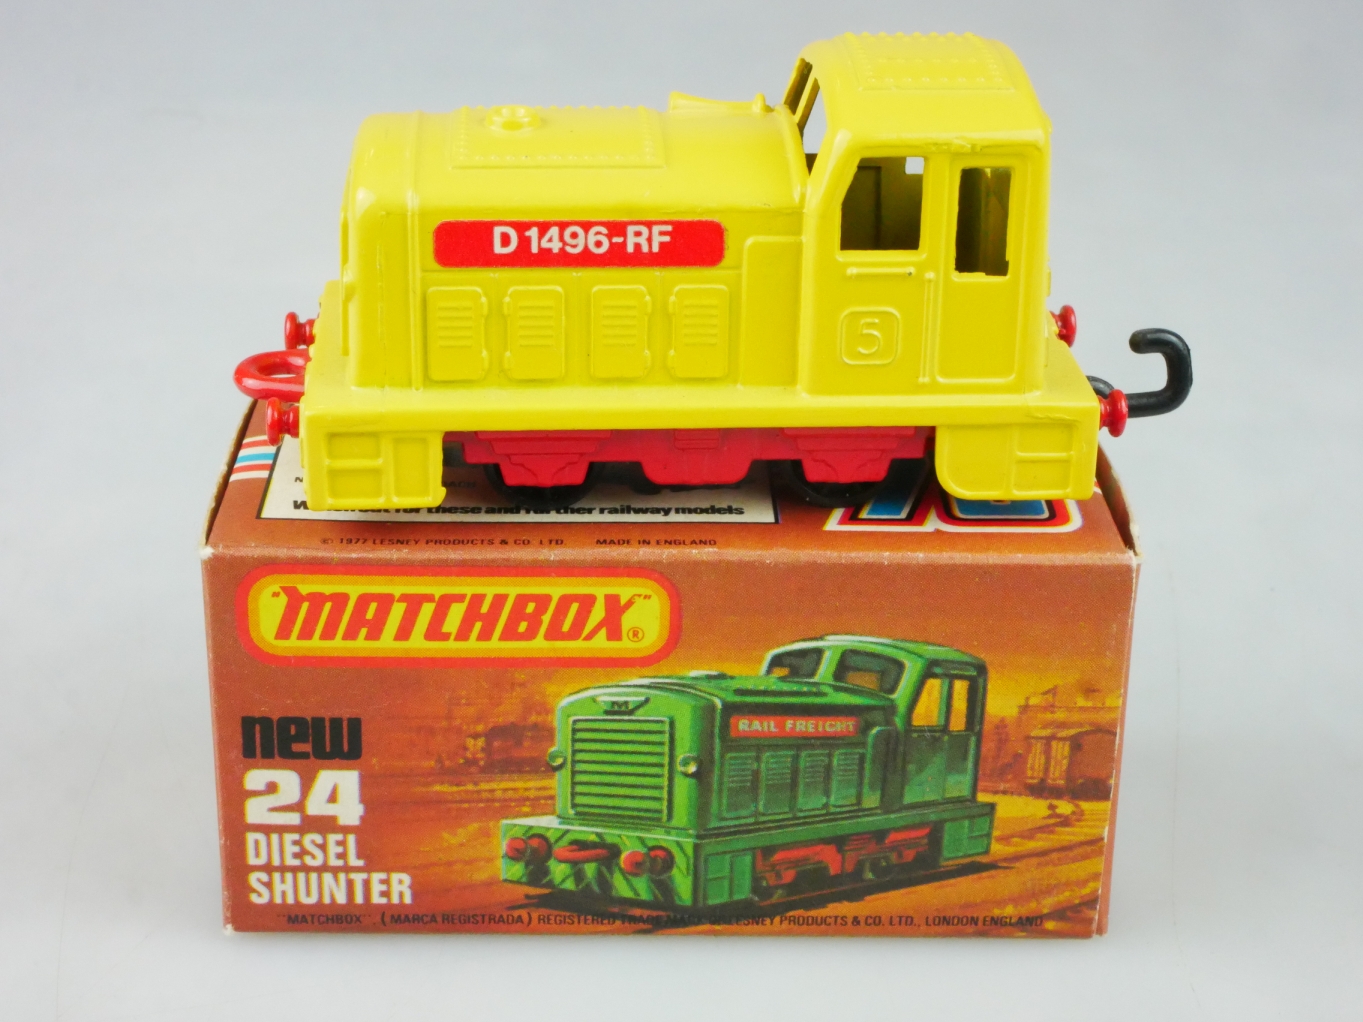 24-C Diesel Shunter yellow - 54565